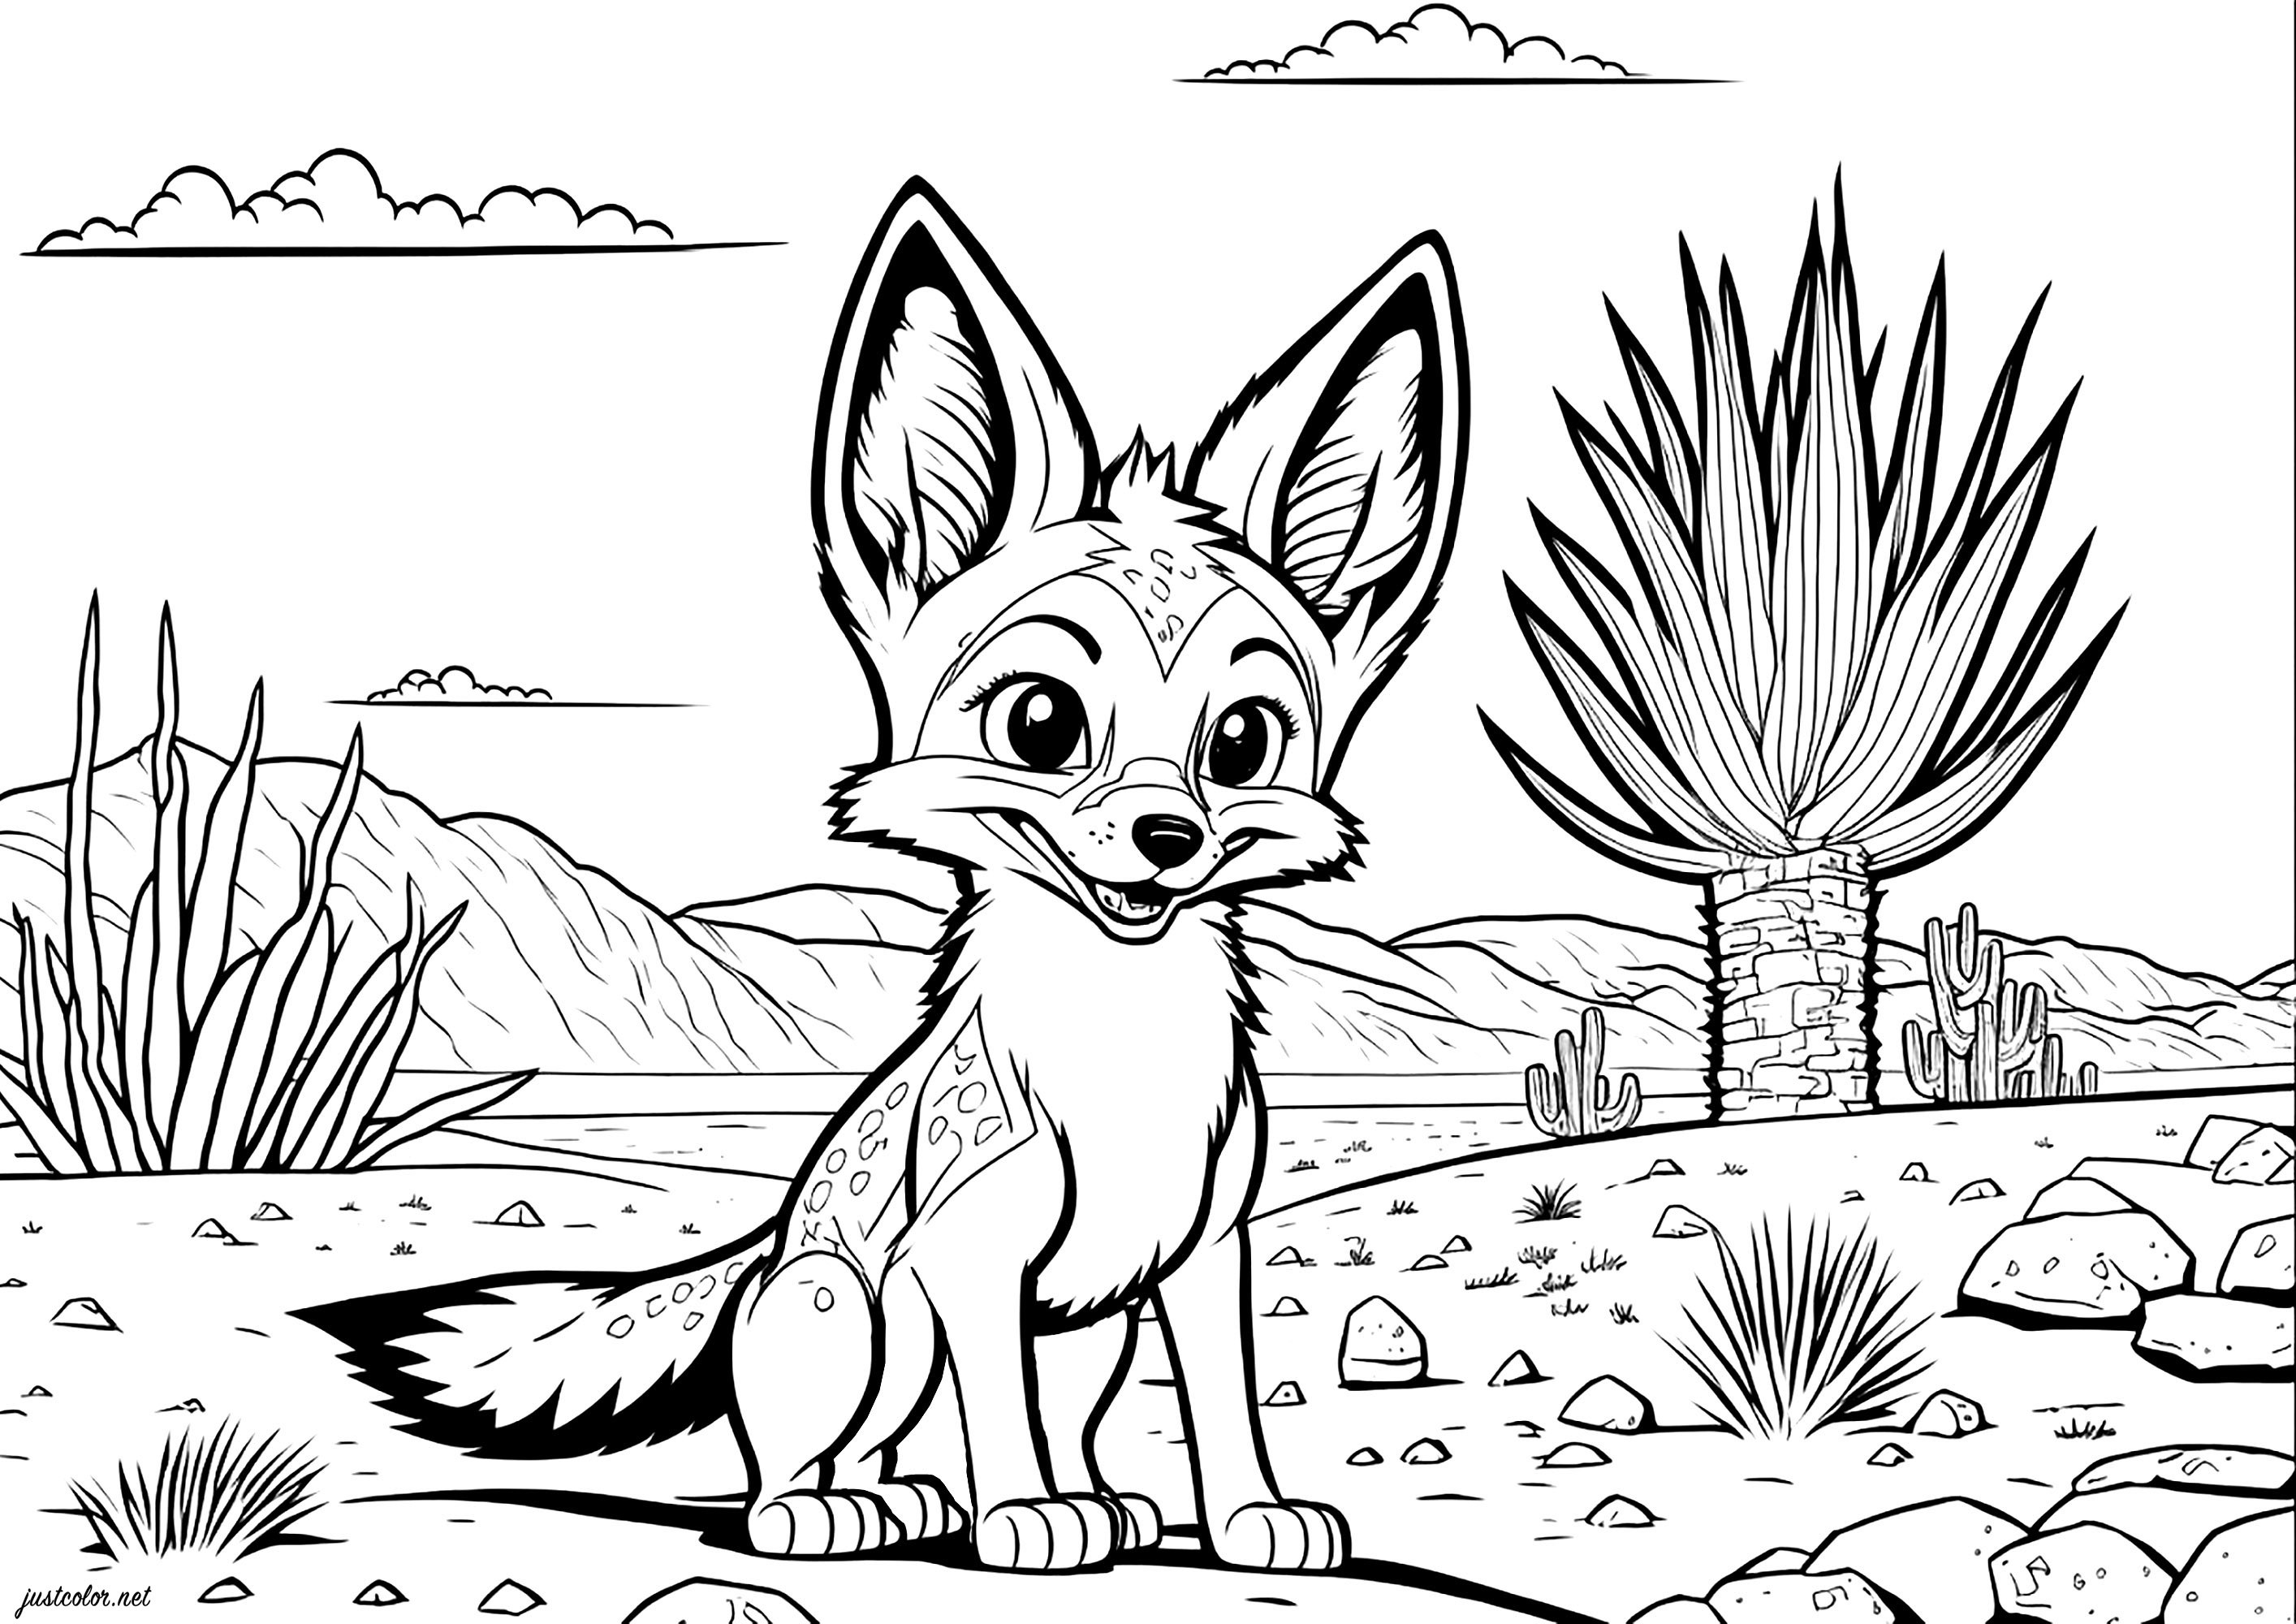 Jovem raposa no deserto - Raposas - Coloring Pages for Adults